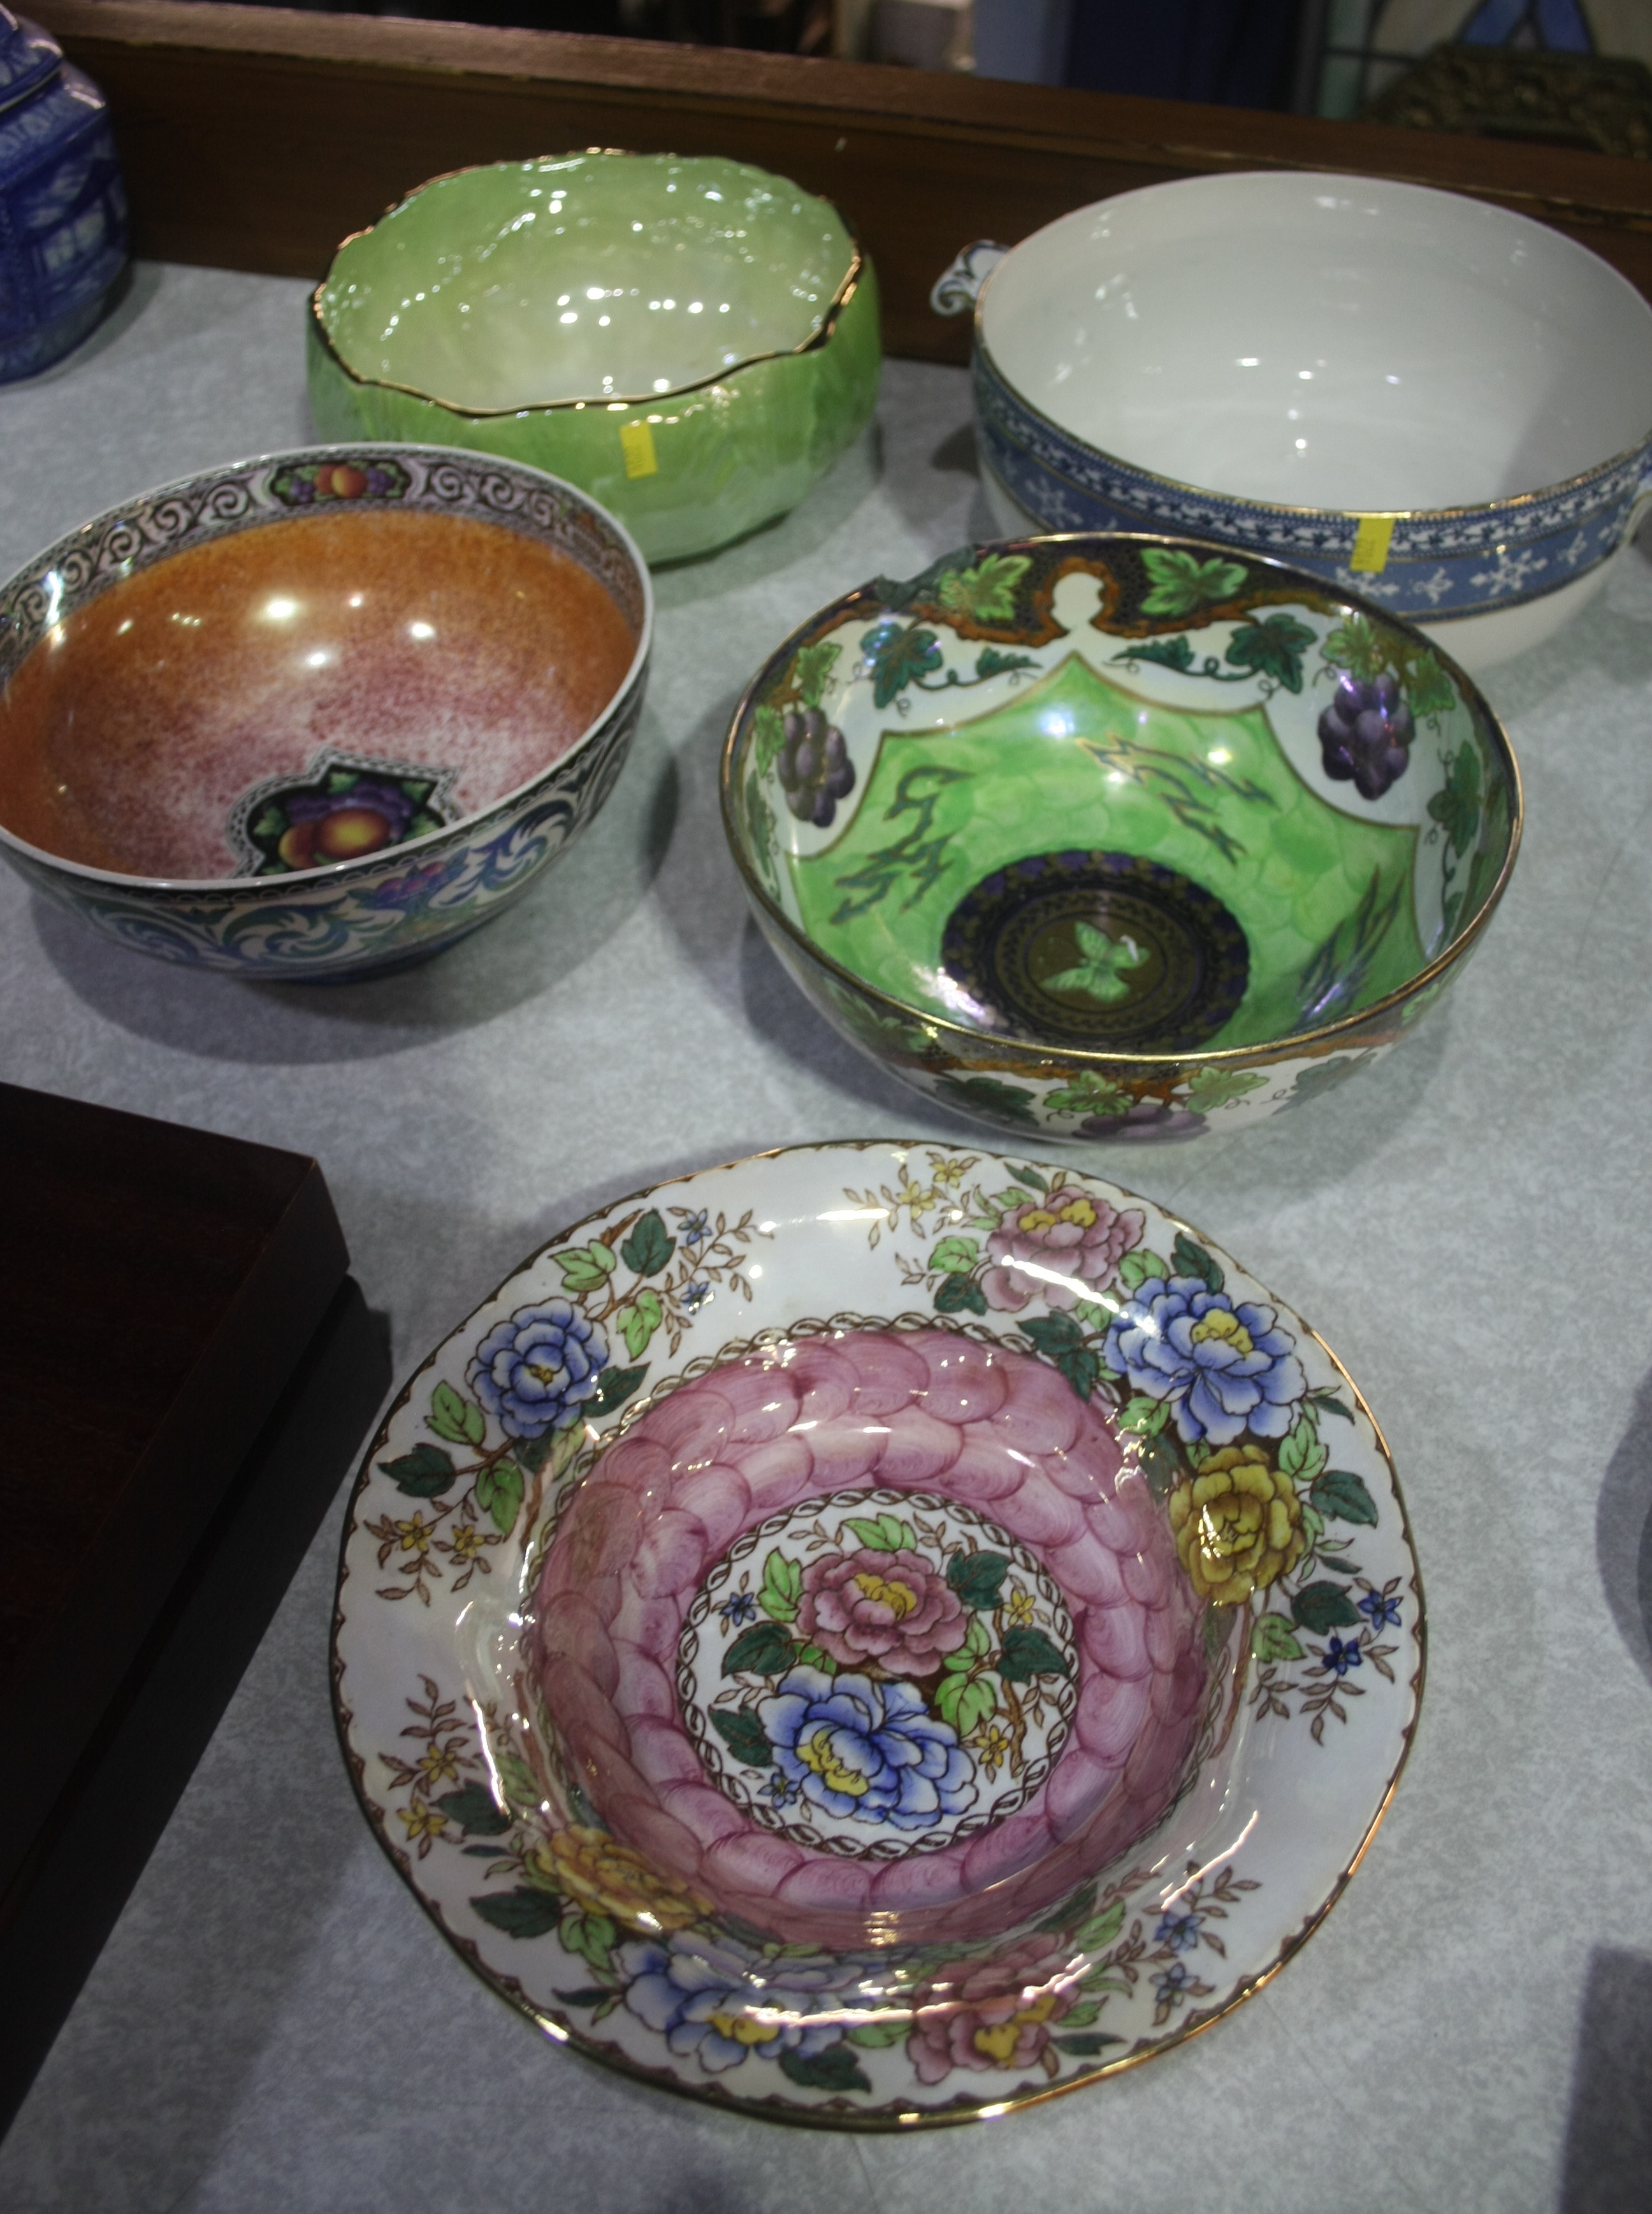 Five Maling bowls